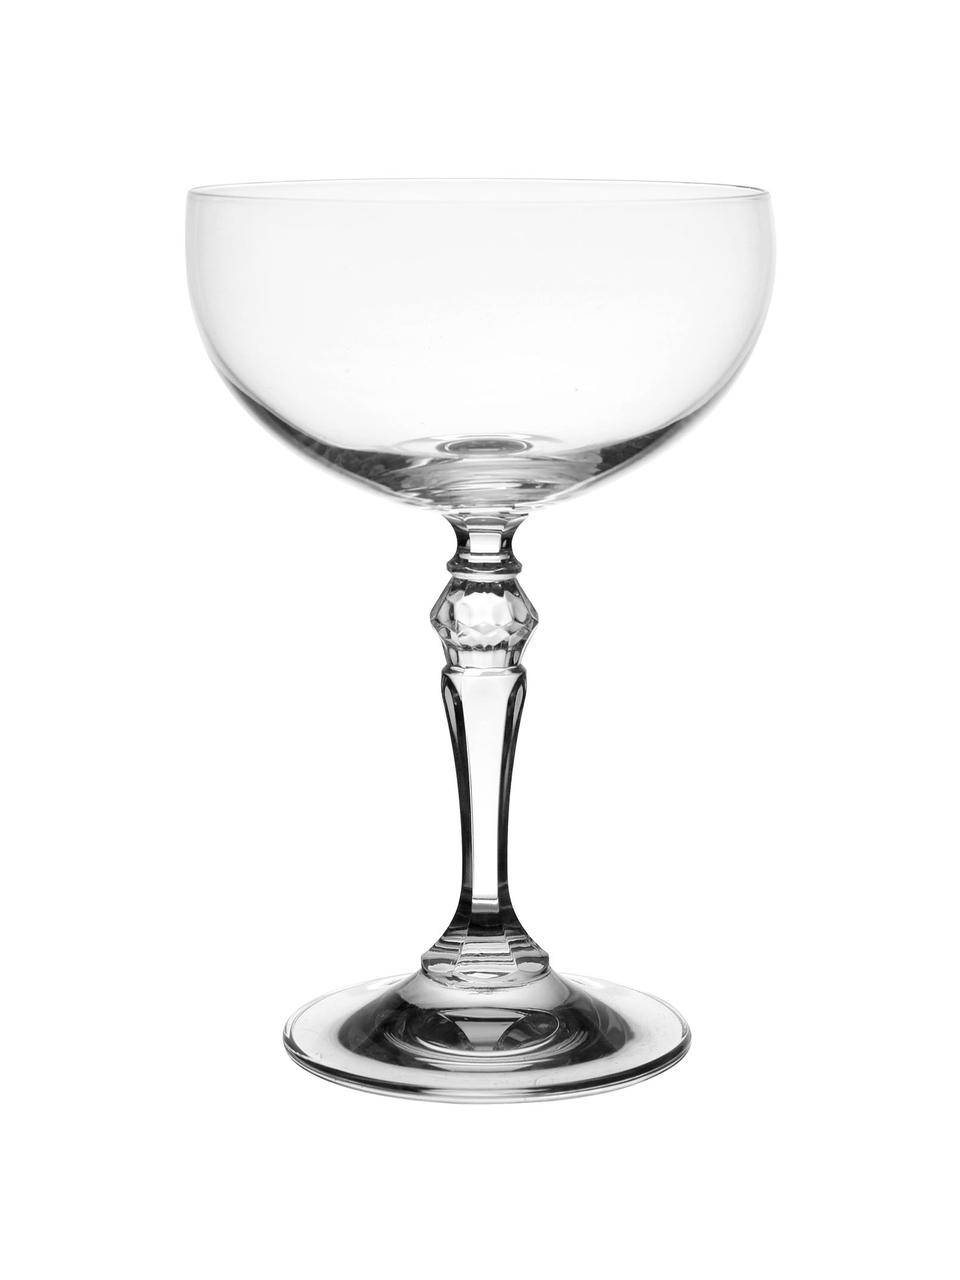 Kristall-Champagnerschalen Largo in Transparent, 6 Stück, Kristallglas, Transparent, Ø 11 x H 16 cm